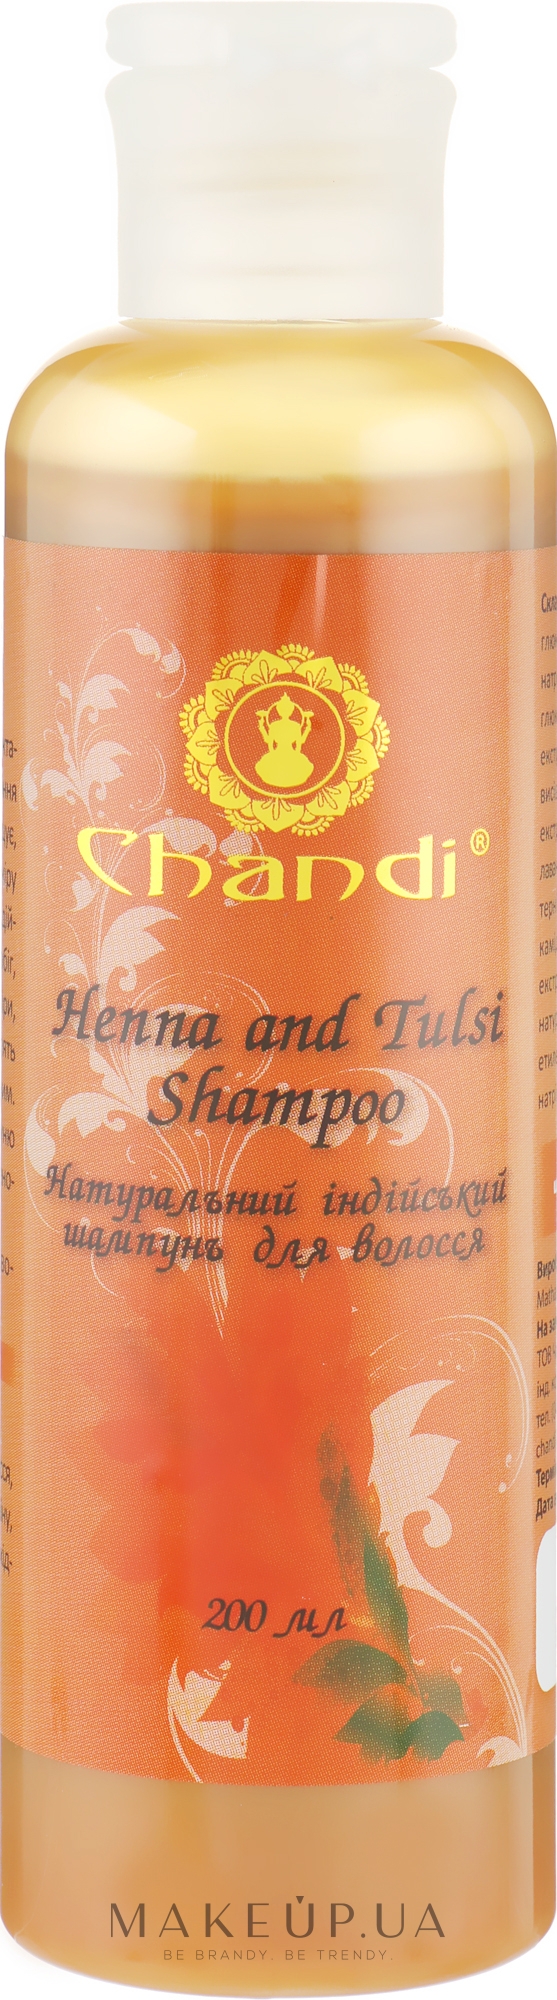 Натуральный индийский шампунь "Хна и Тулси" - Chandi Henna and Tulsi Shampoo — фото 200ml